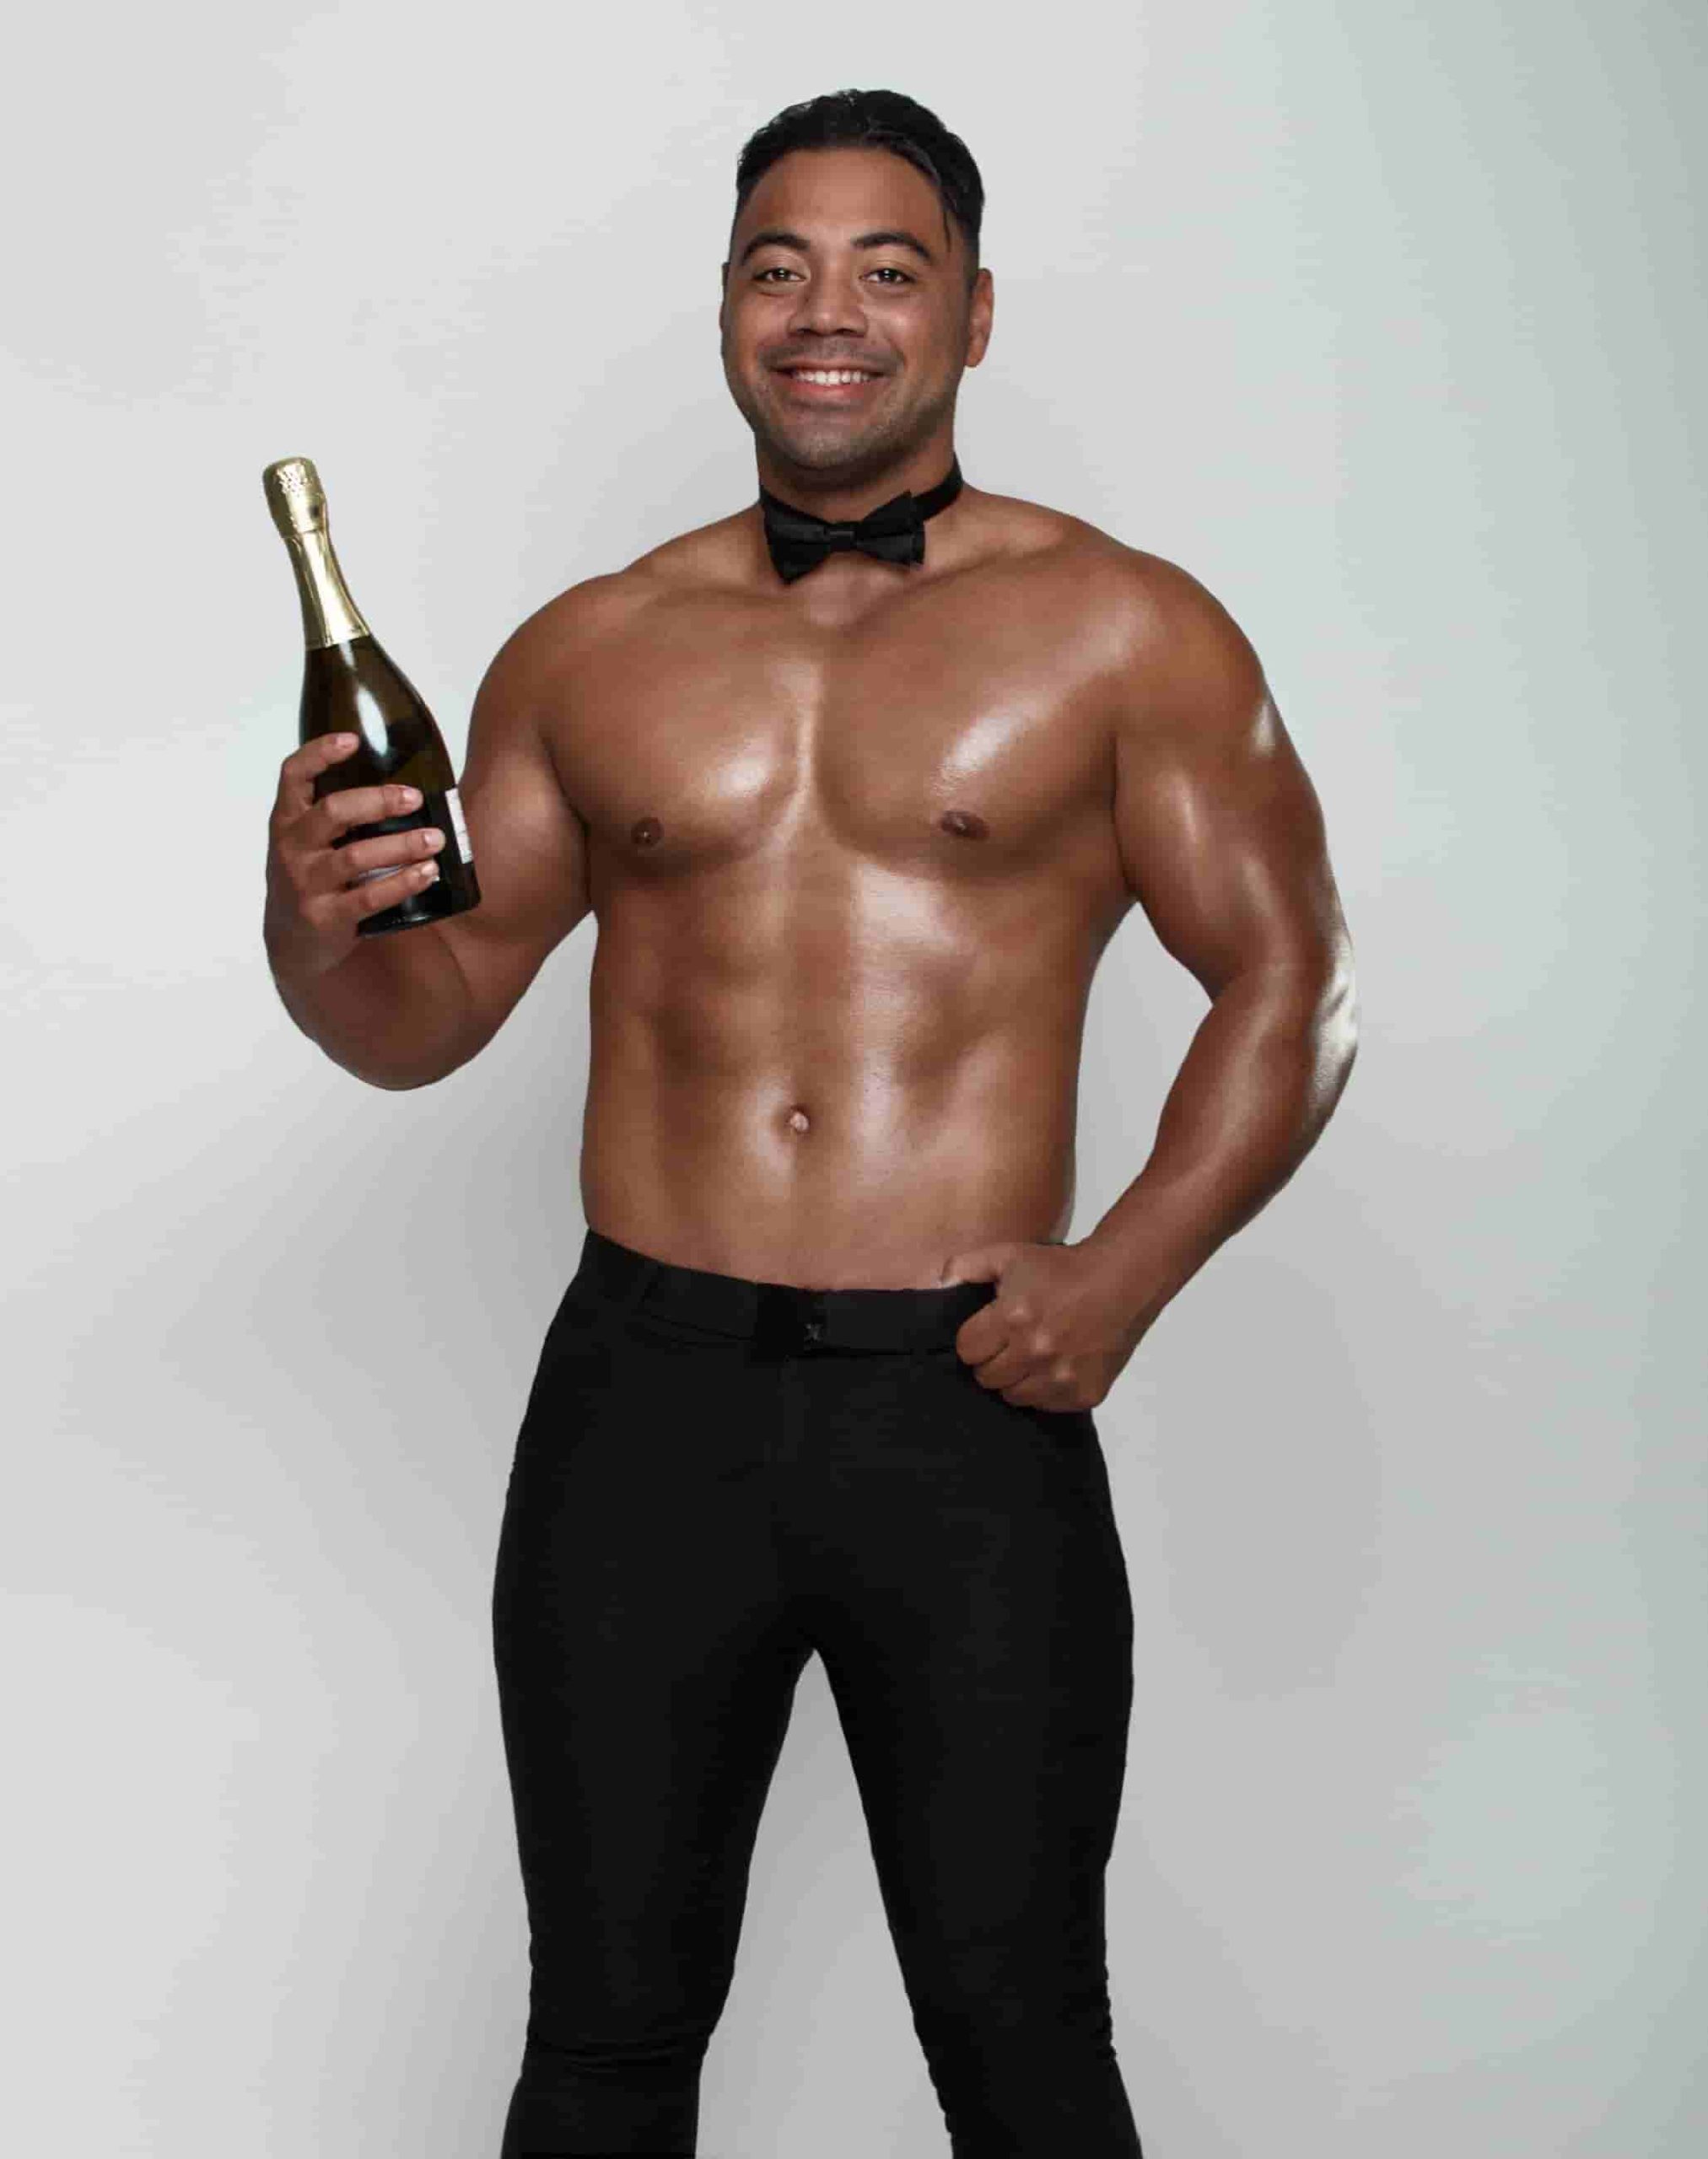 antoine-magic-men-topless-waiter-wine-brisbane-min